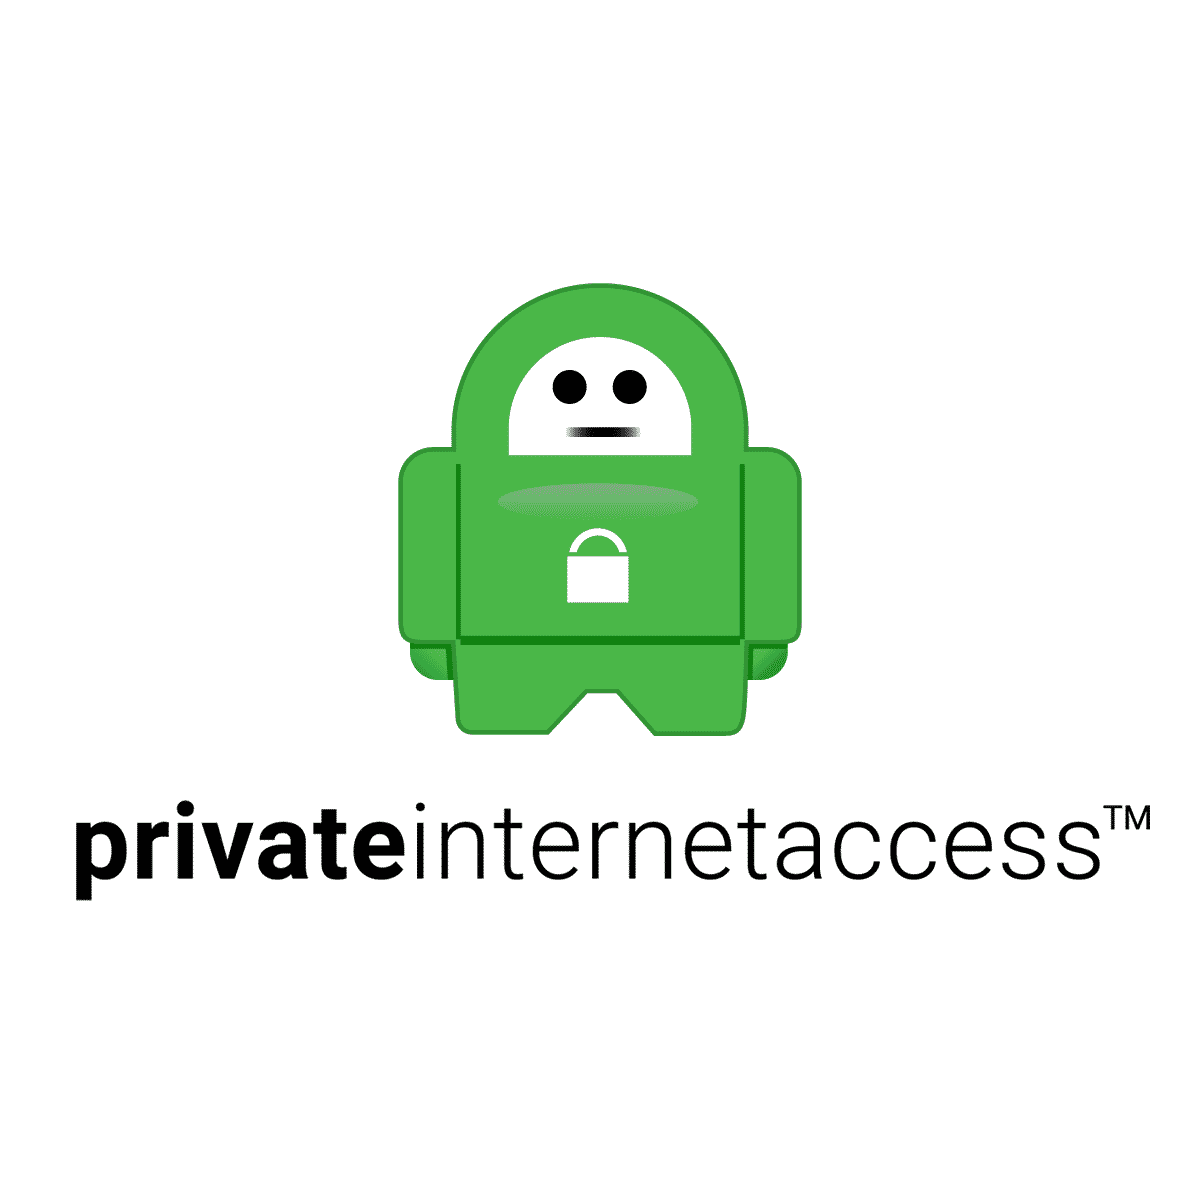 PrivateInternetAccess logo